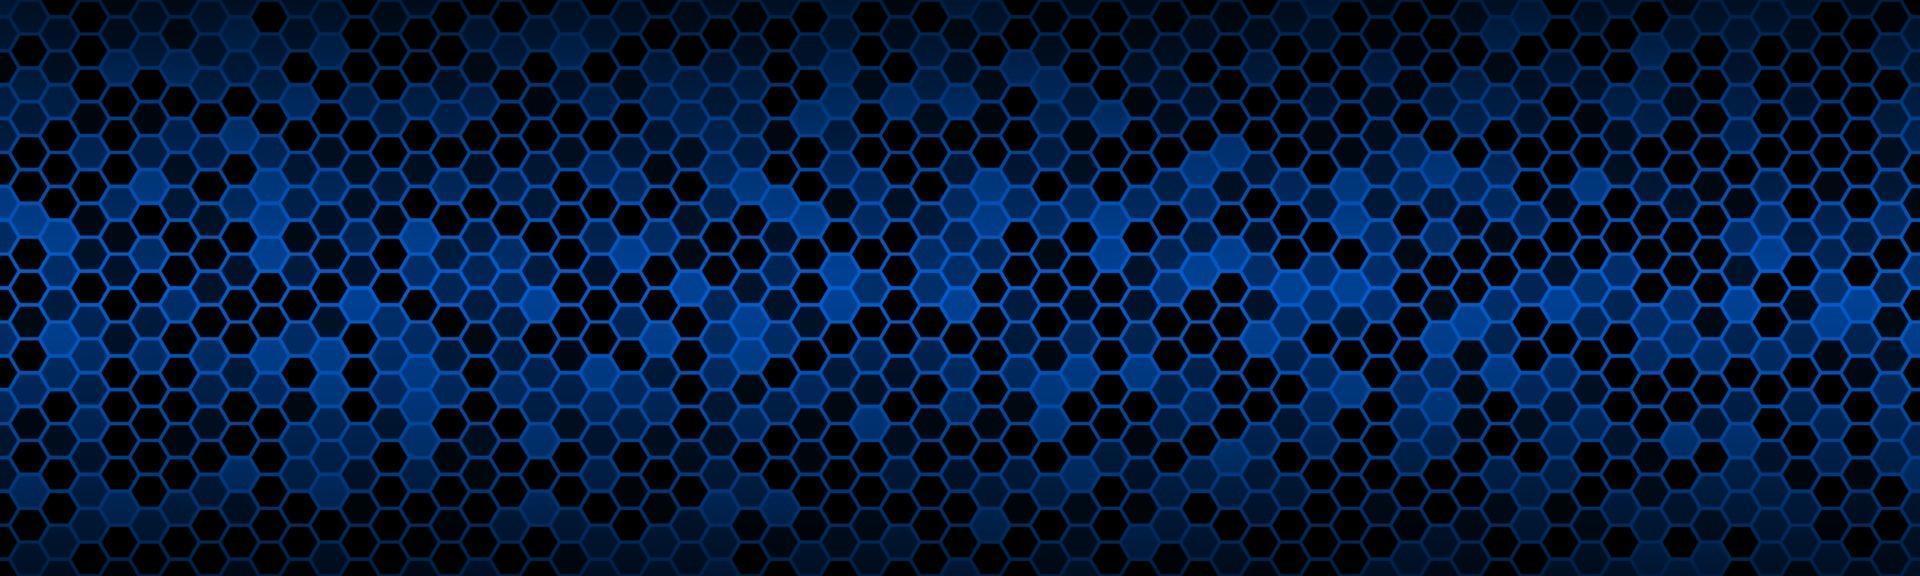 Blue widescreen banner with hexagons vector